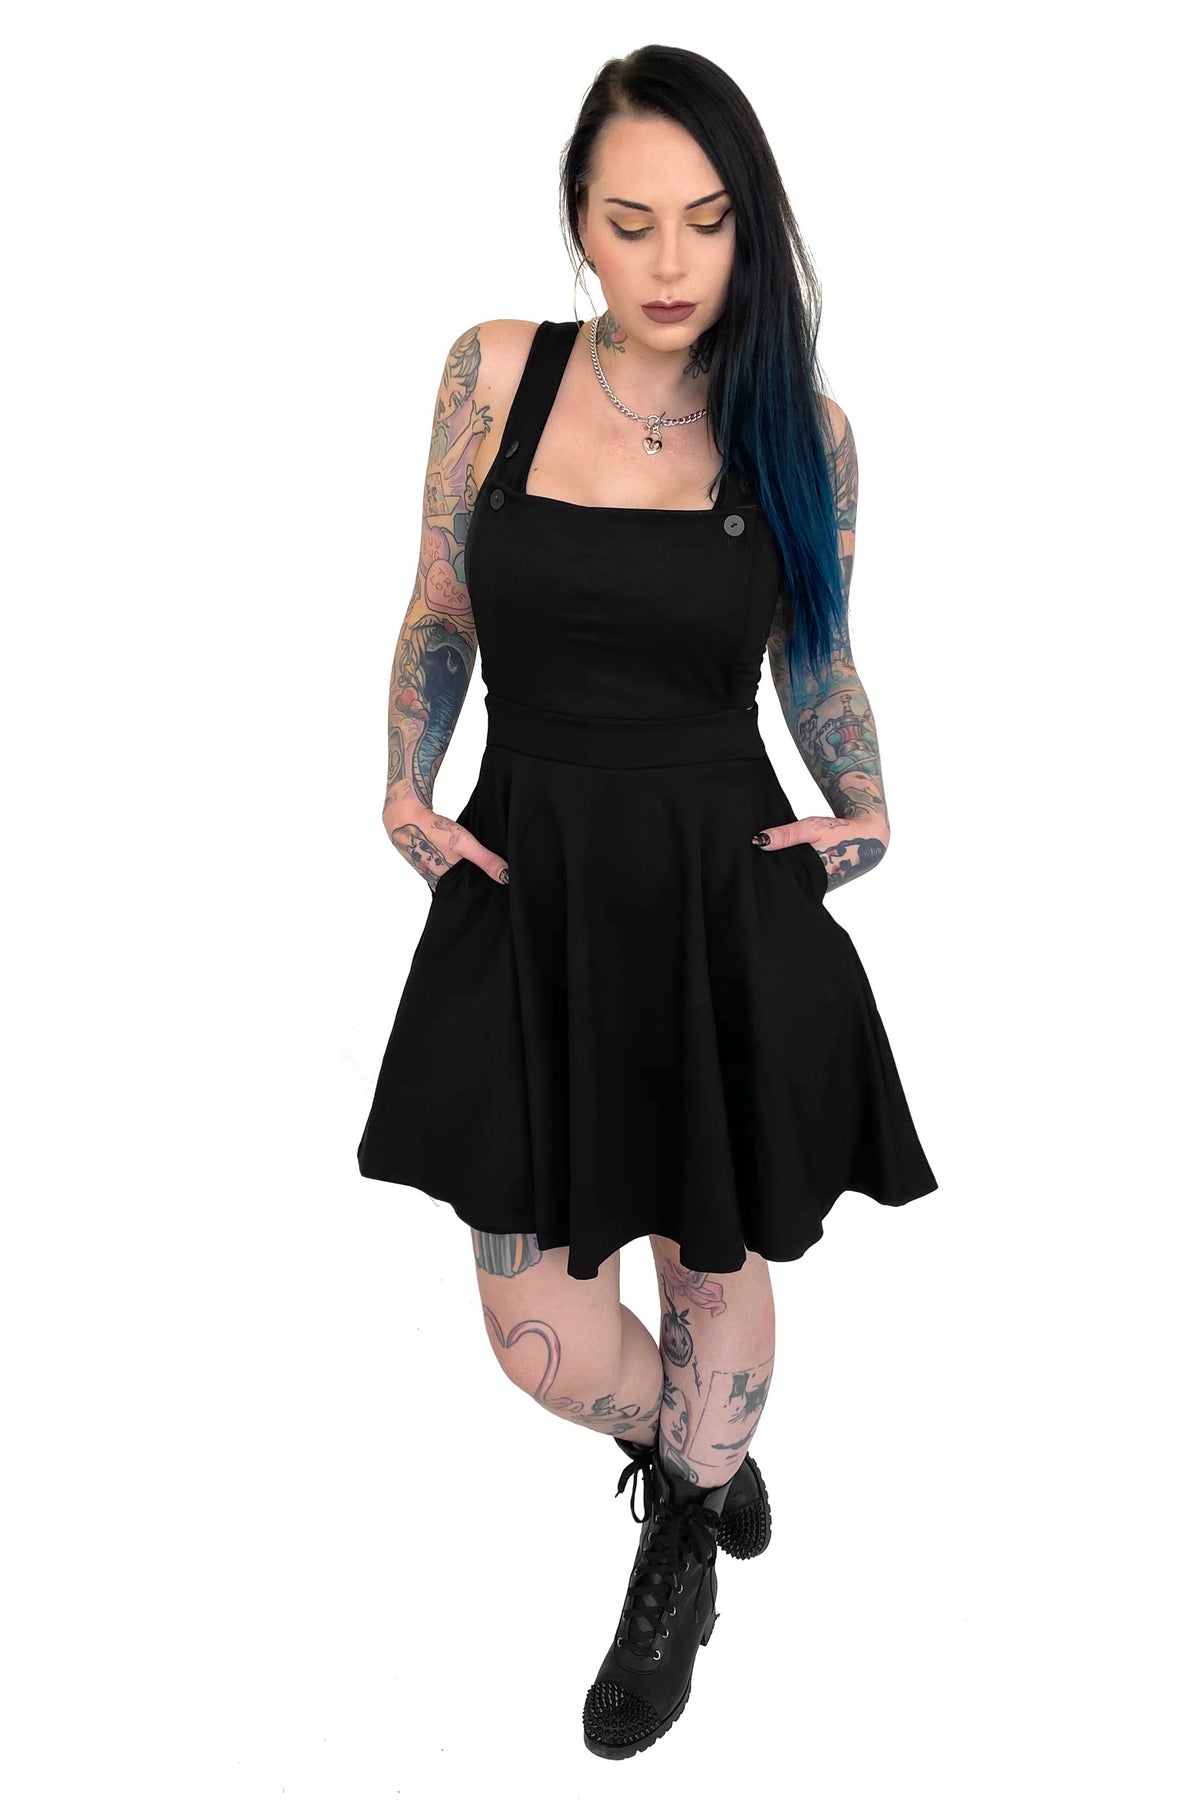 black pinafore short dress with pockets